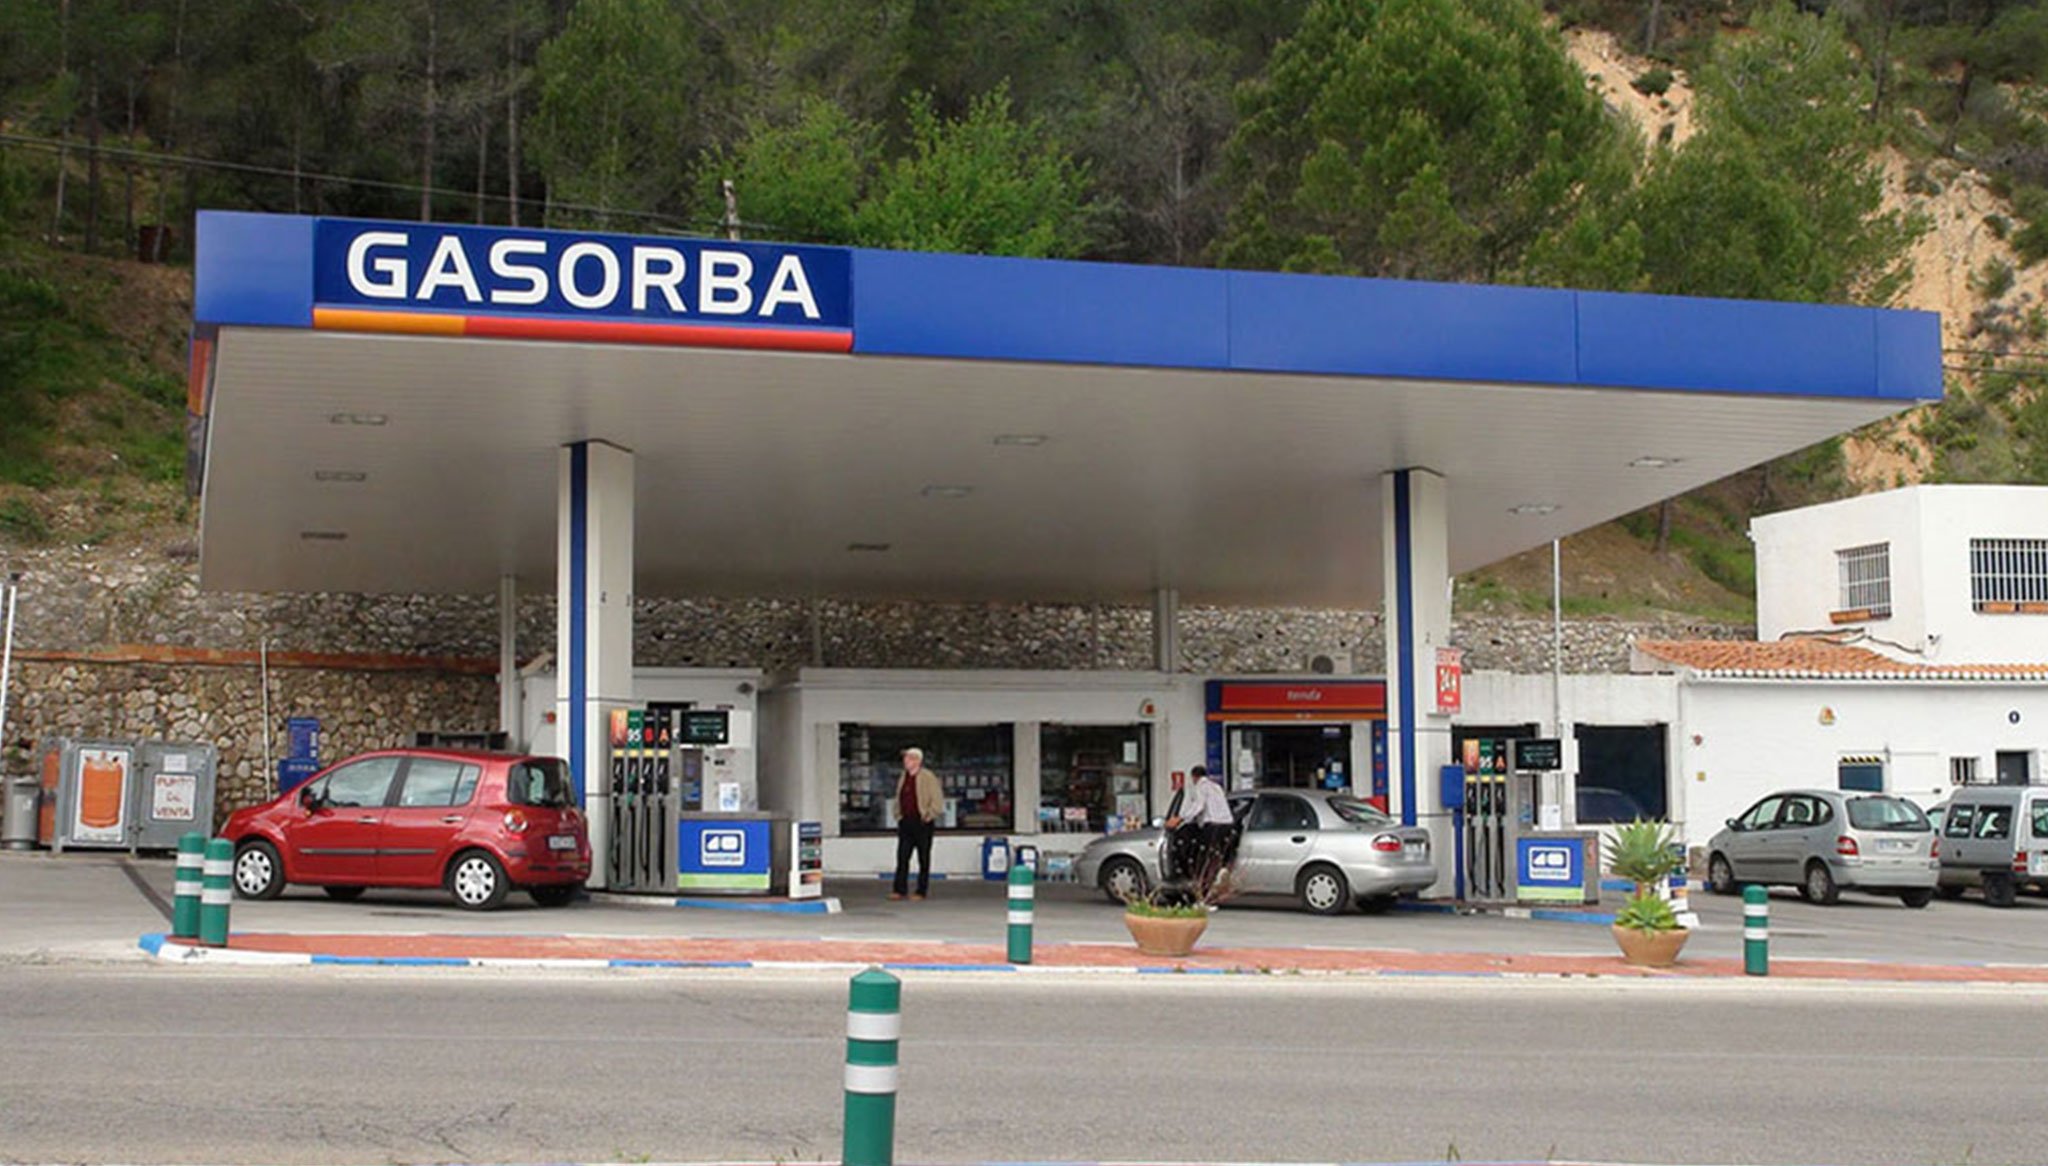 Gasolinera Gasorba